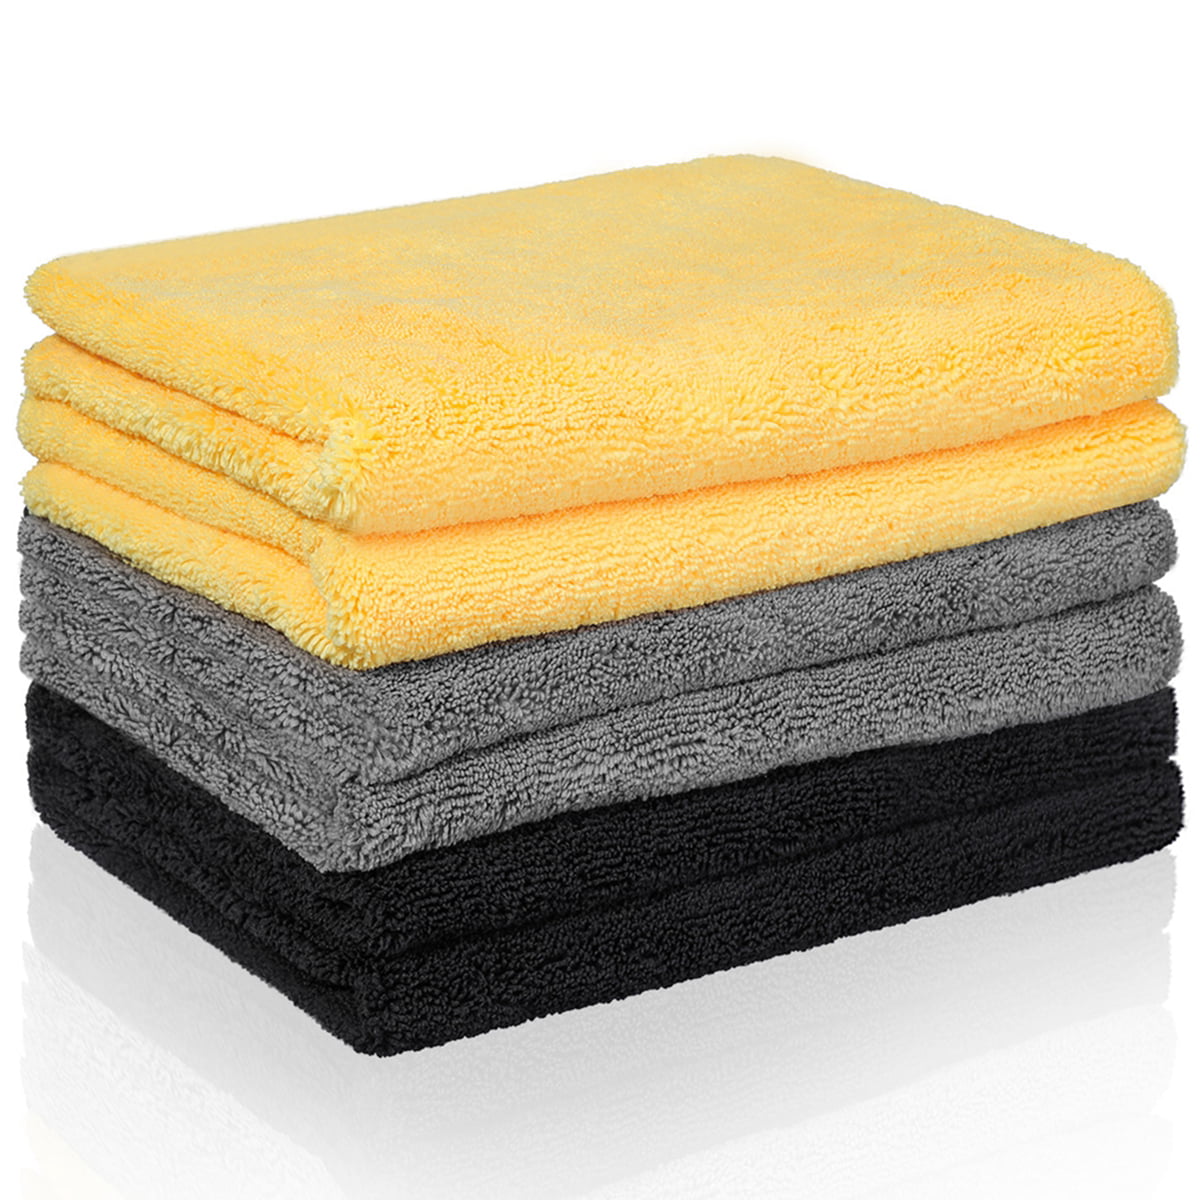 Armor All Microfiber Cleaning Cloth 8 Blue 24 Pack 11.8 x 15 8 Orange 8 Yellow Microfiber Towels Premium Microfiber Towel Value Pack 